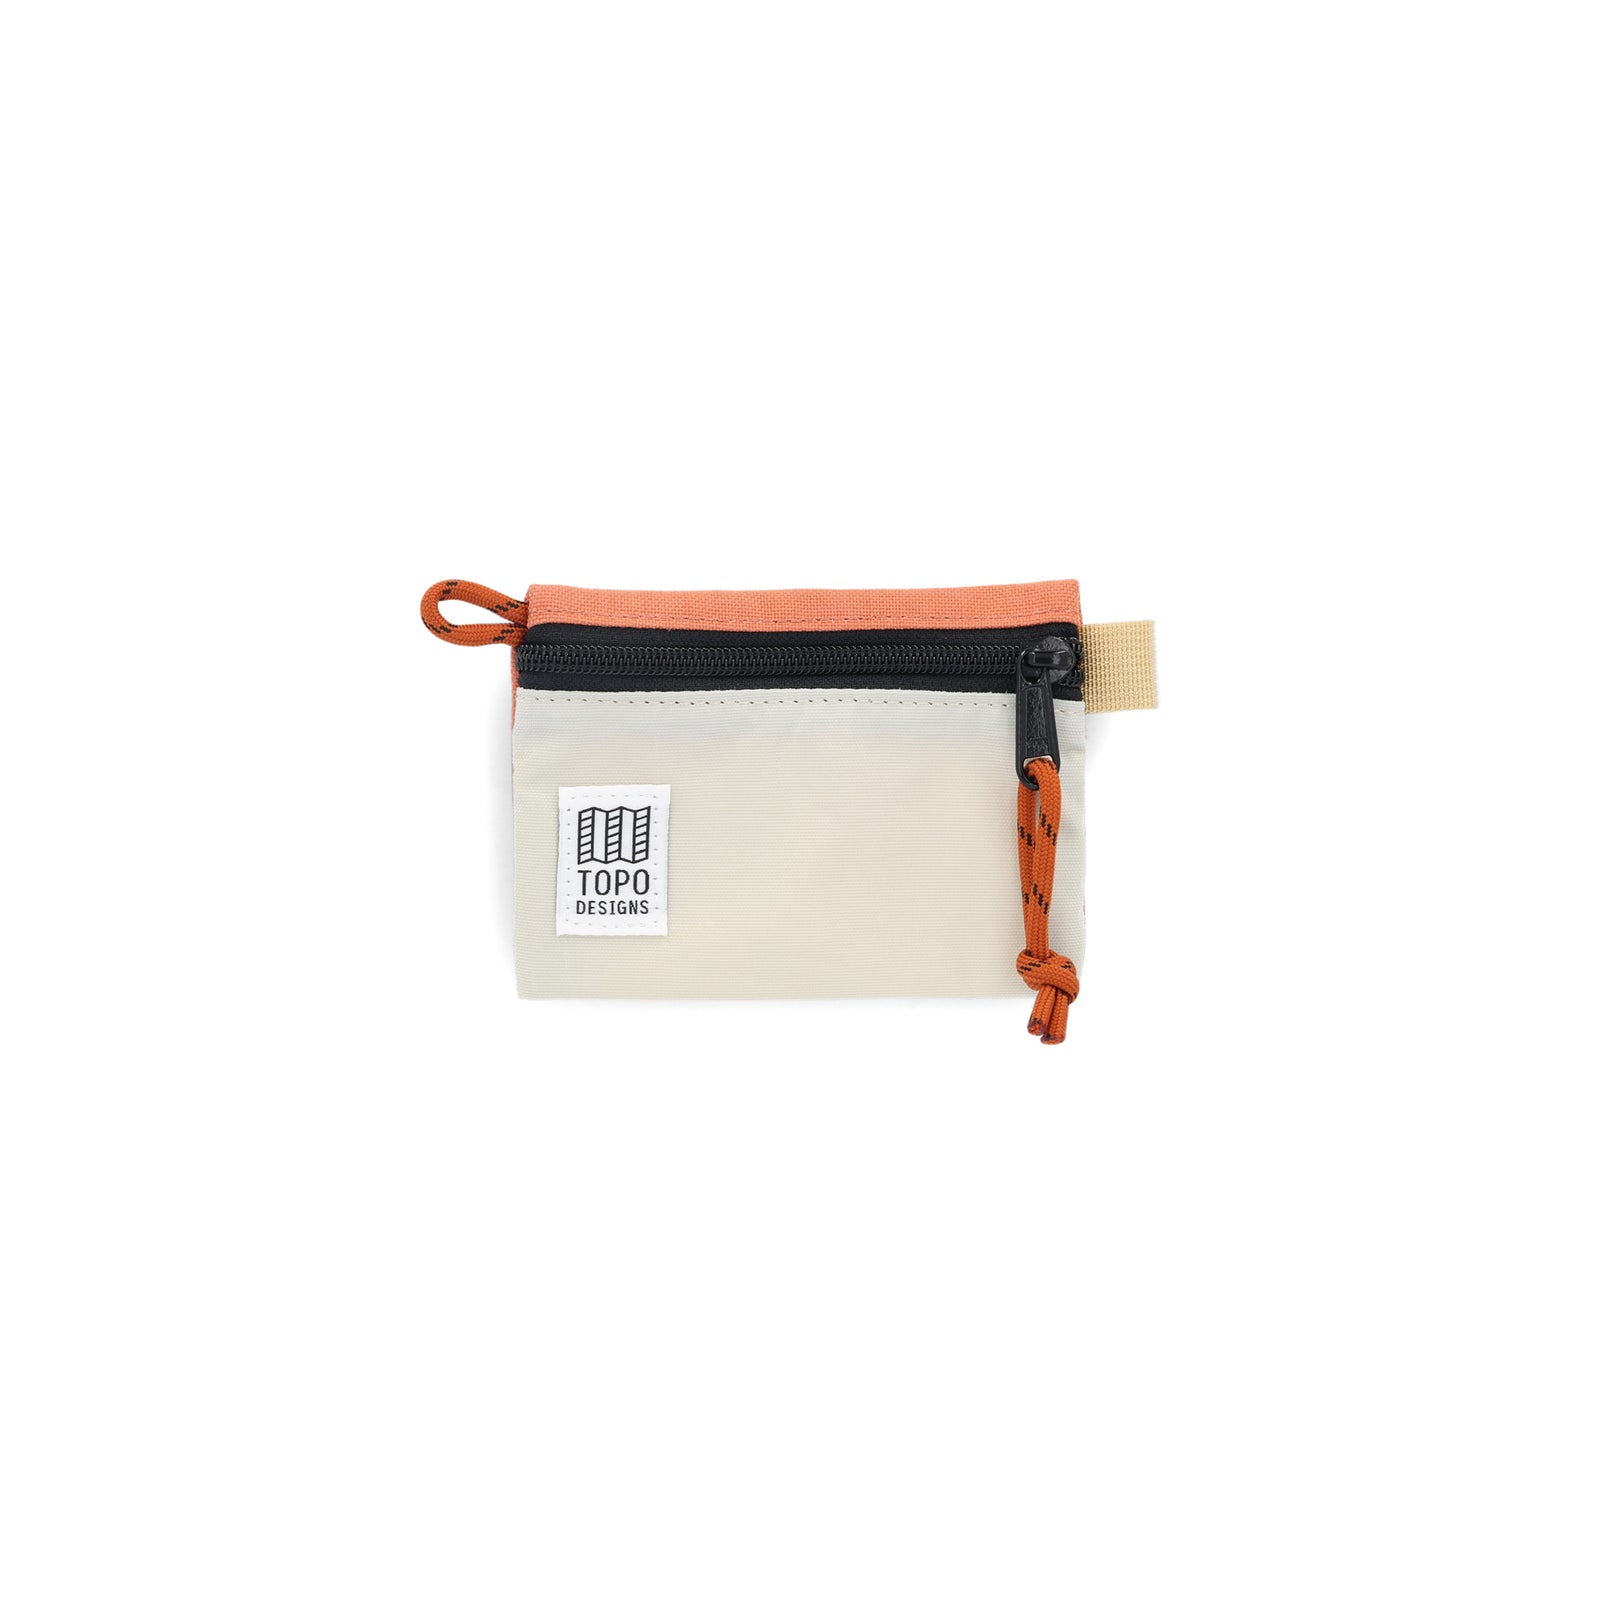 Topo Designs Accessory Bag in "Micro" "Bone White / Coral - Recycled" pink nylon.